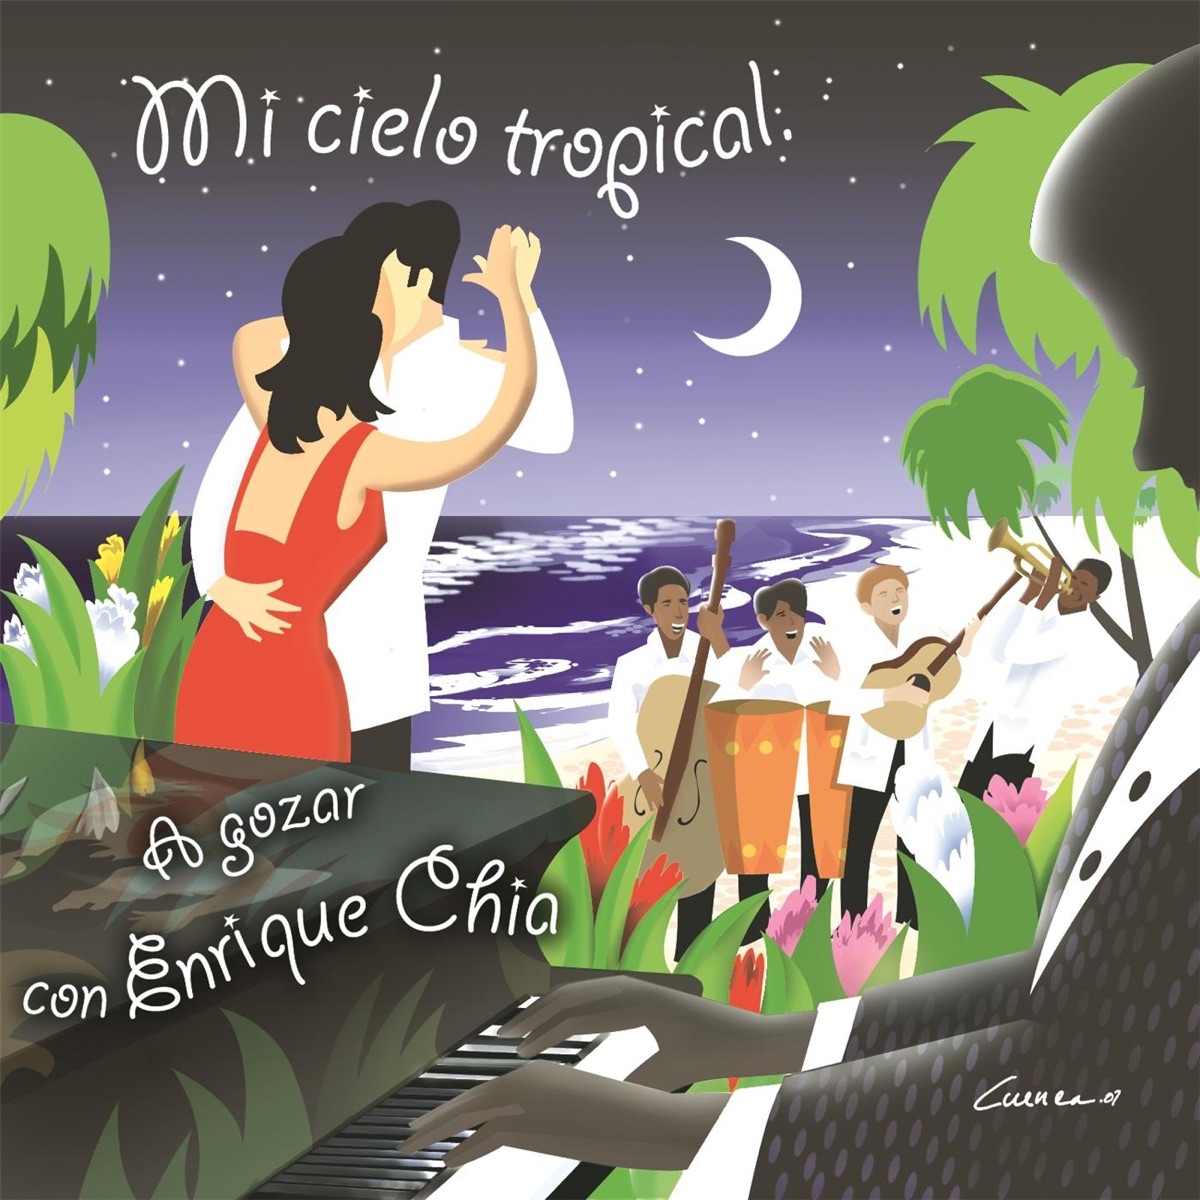 Sentimental Piano - Album by Enrique Chia - Apple Music